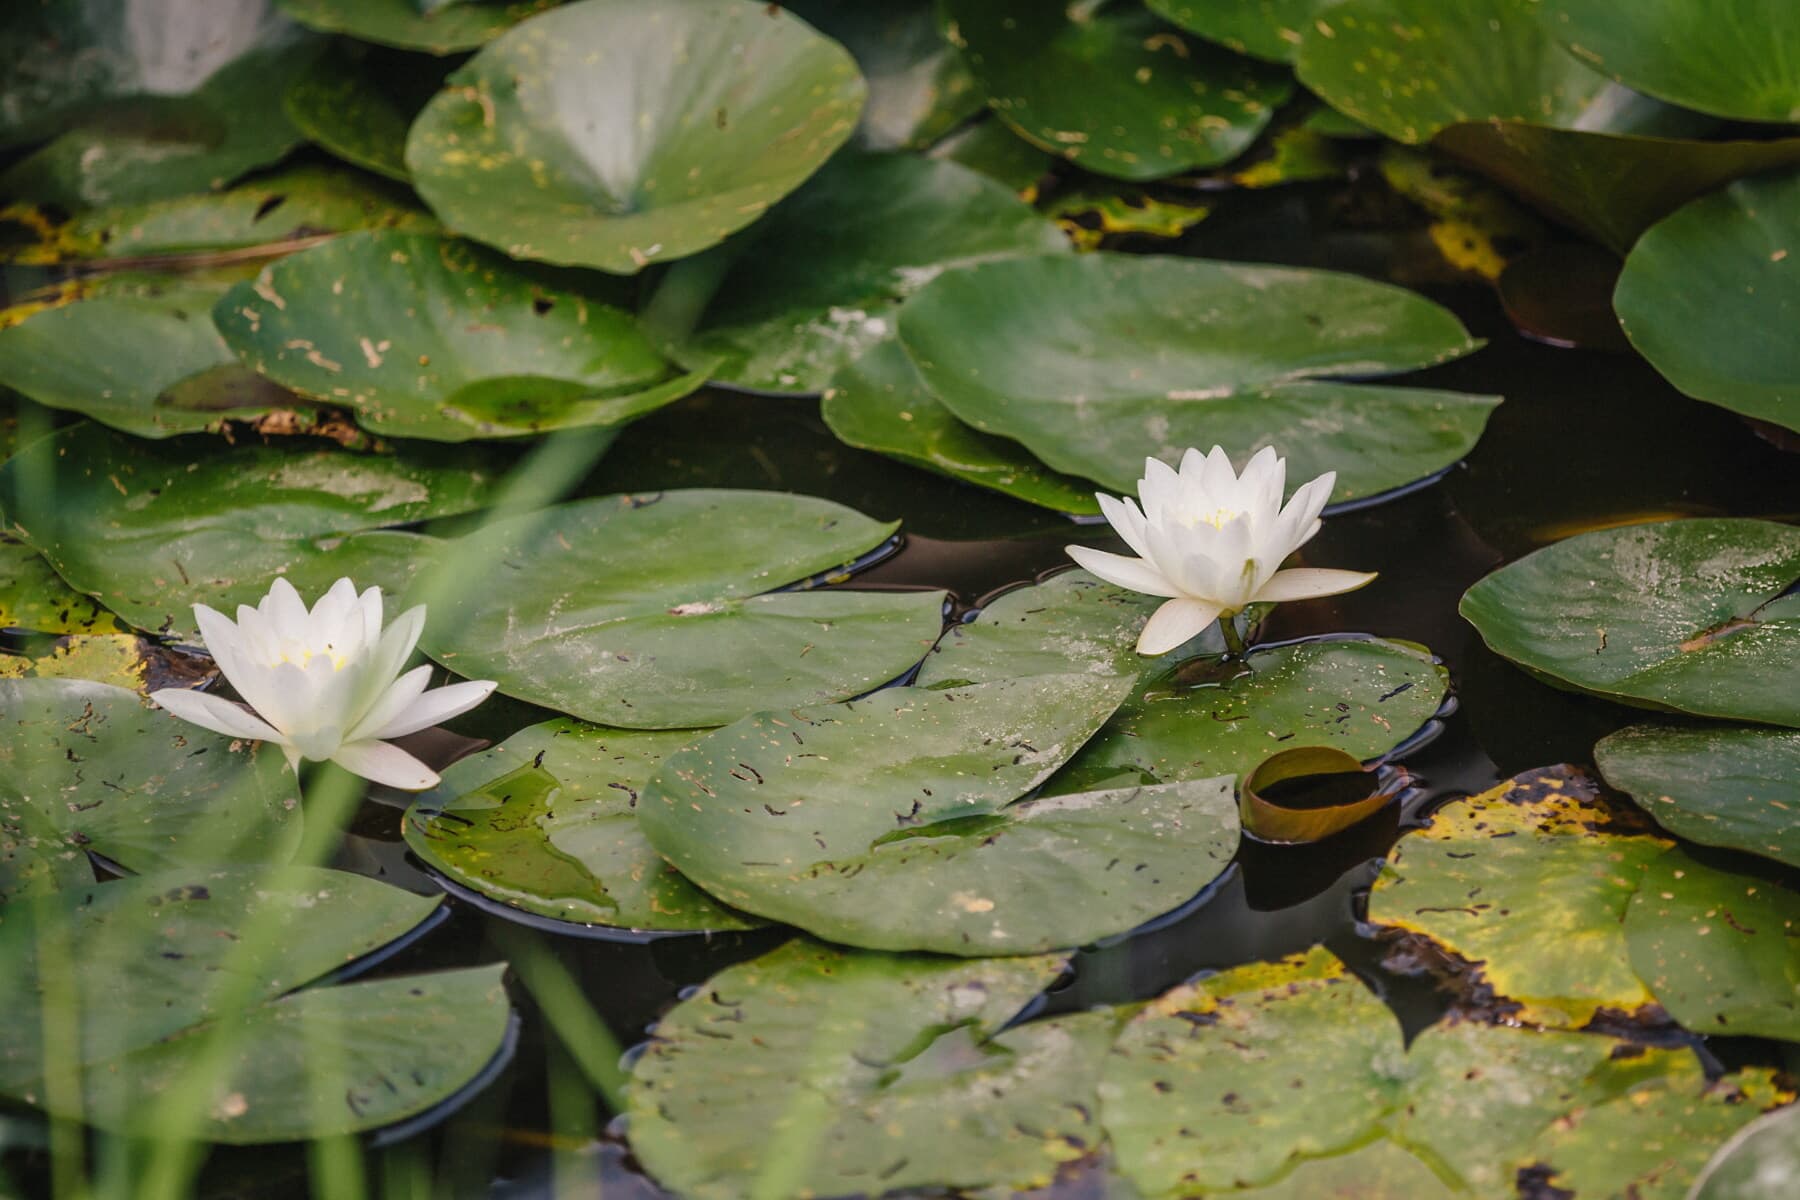 Imagen gratis: flor blanca, lirio de agua, hojas verdes, lirio de agua,  Lotus, acuática, piscina, planta, flor, flor